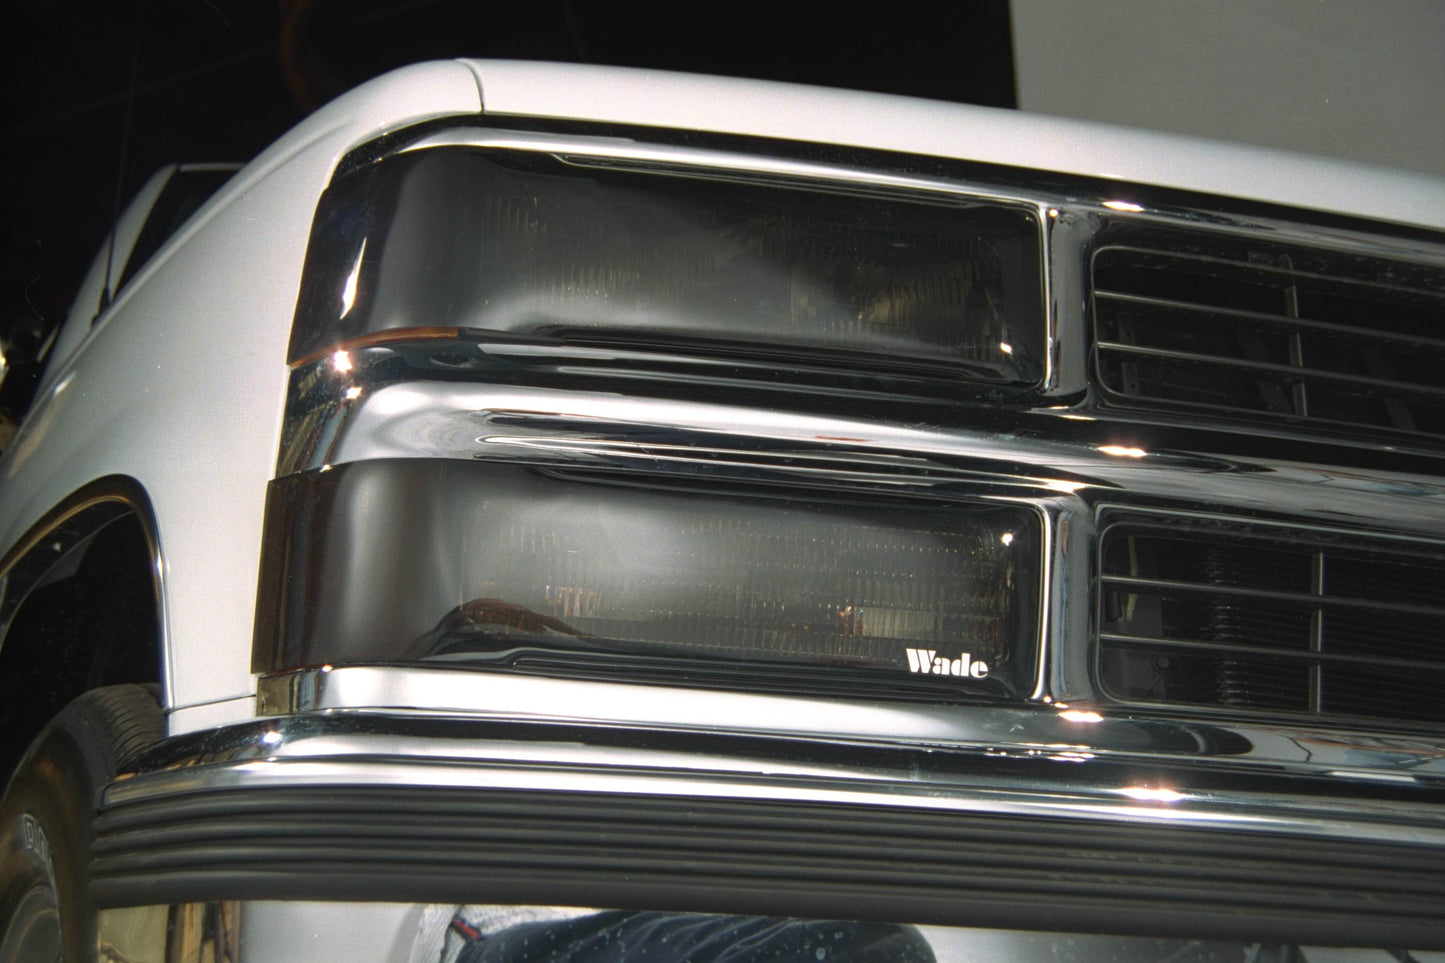 1985 Ford Van Head Light Covers